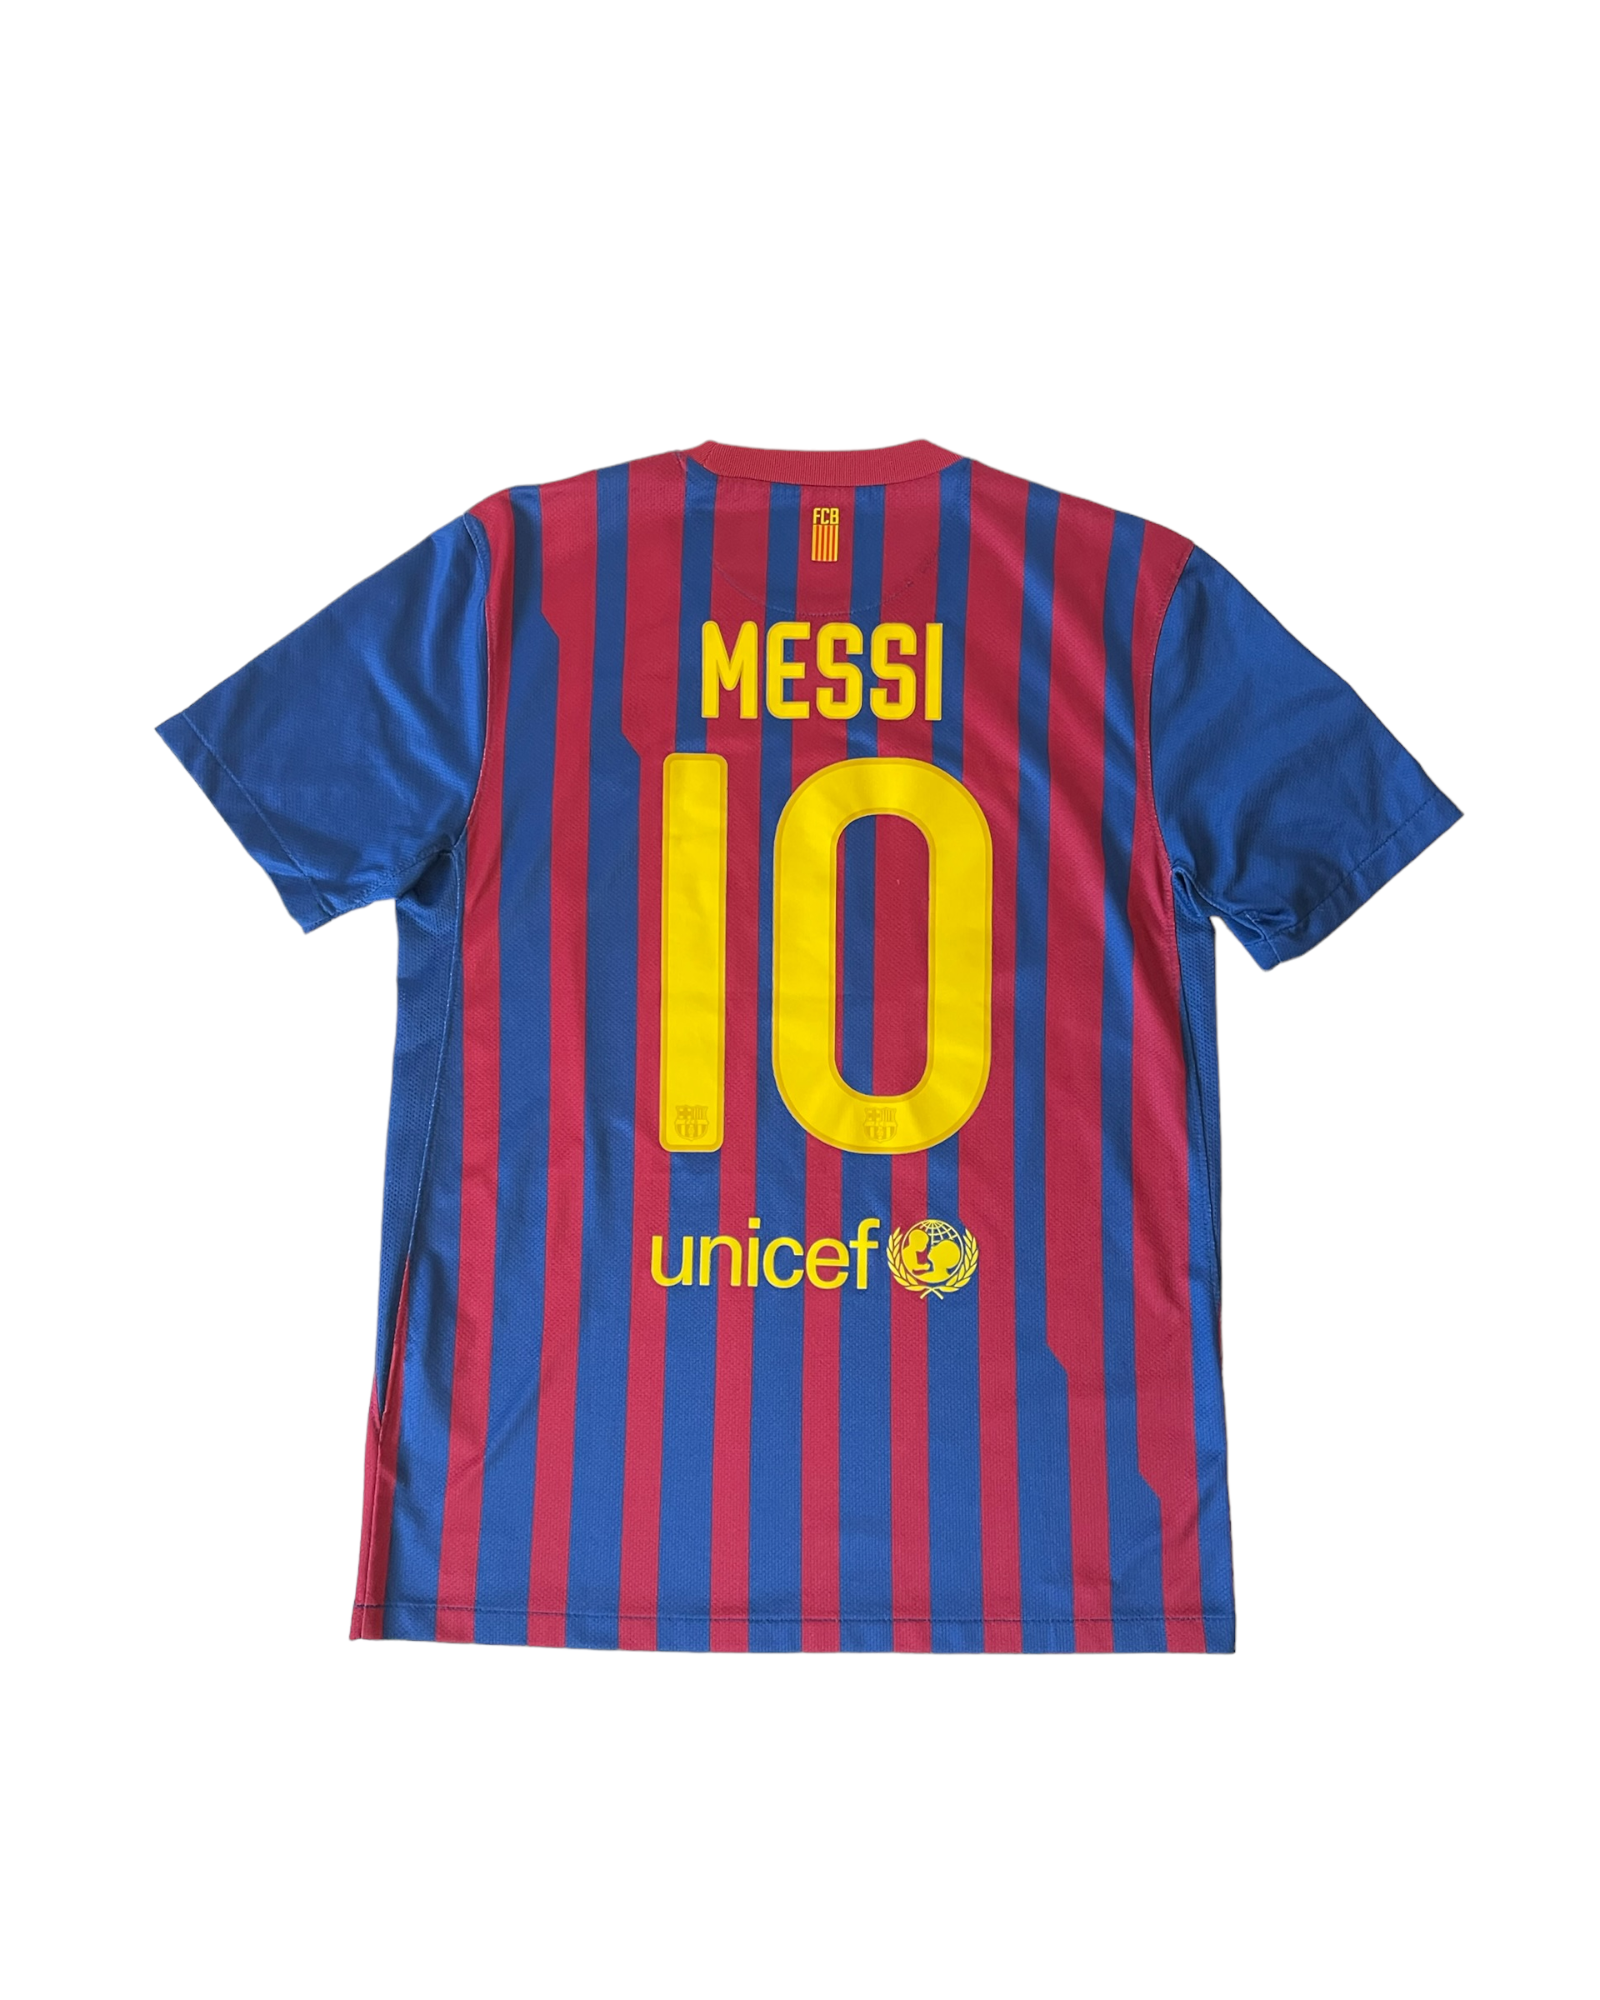 Lionel Messi Barcelona Nike 2011 - 2012 Home Football Shirt #10 Qatar Foundation Unicef Size M Red Blue